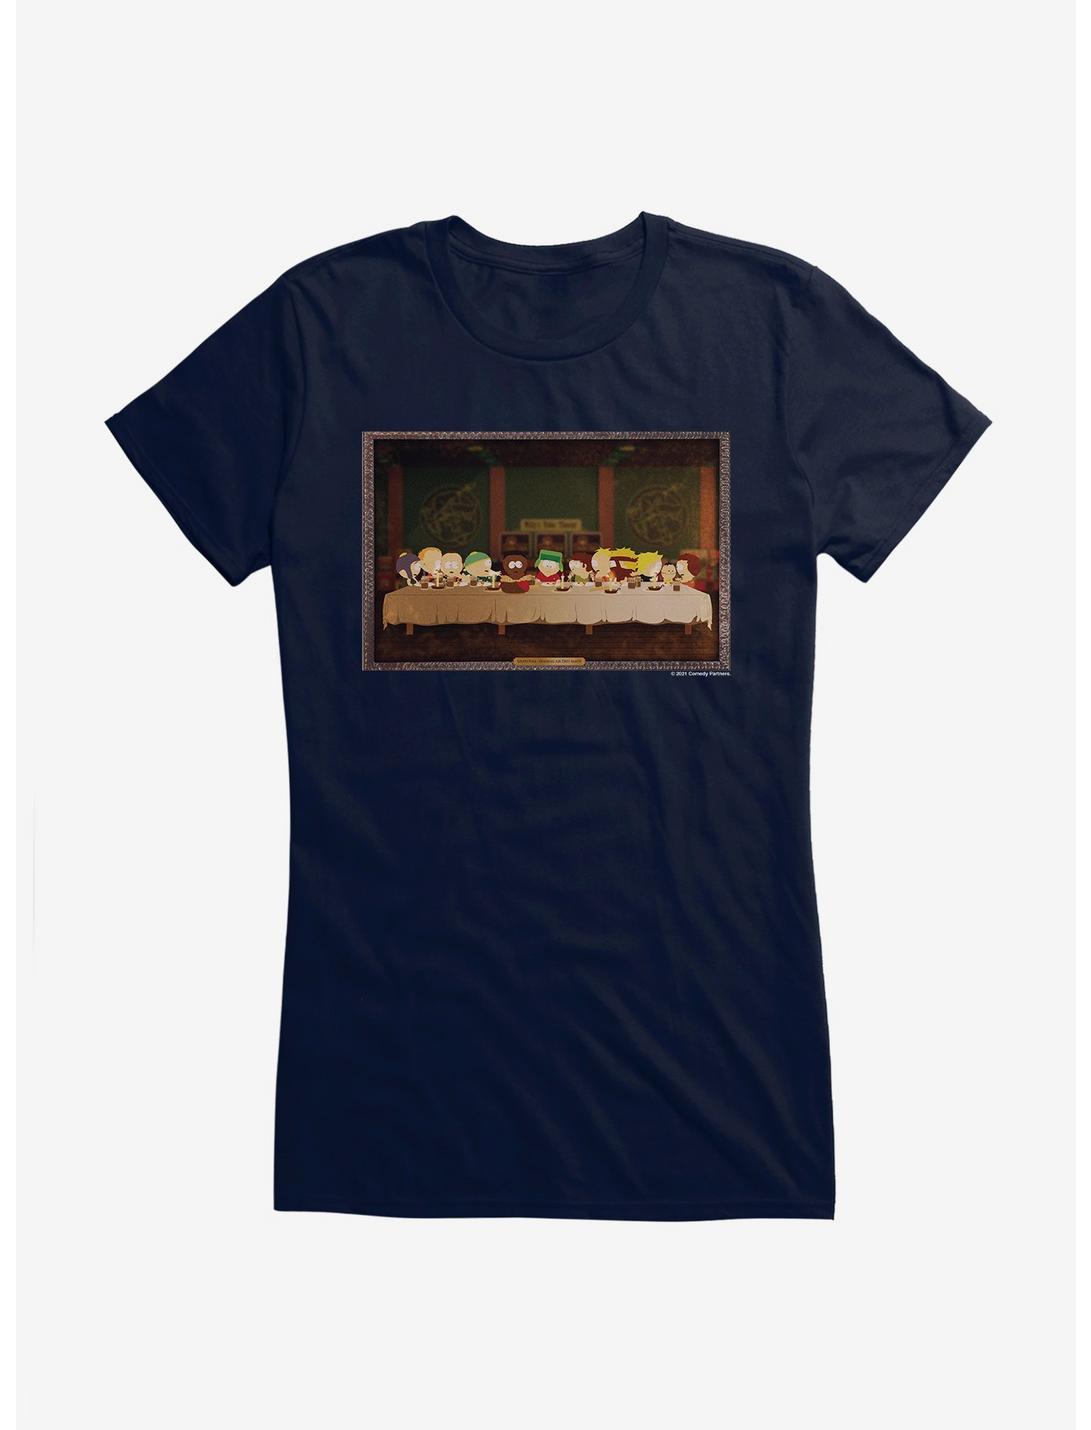 South Park Last Supper Girls T-Shirt, NAVY, hi-res